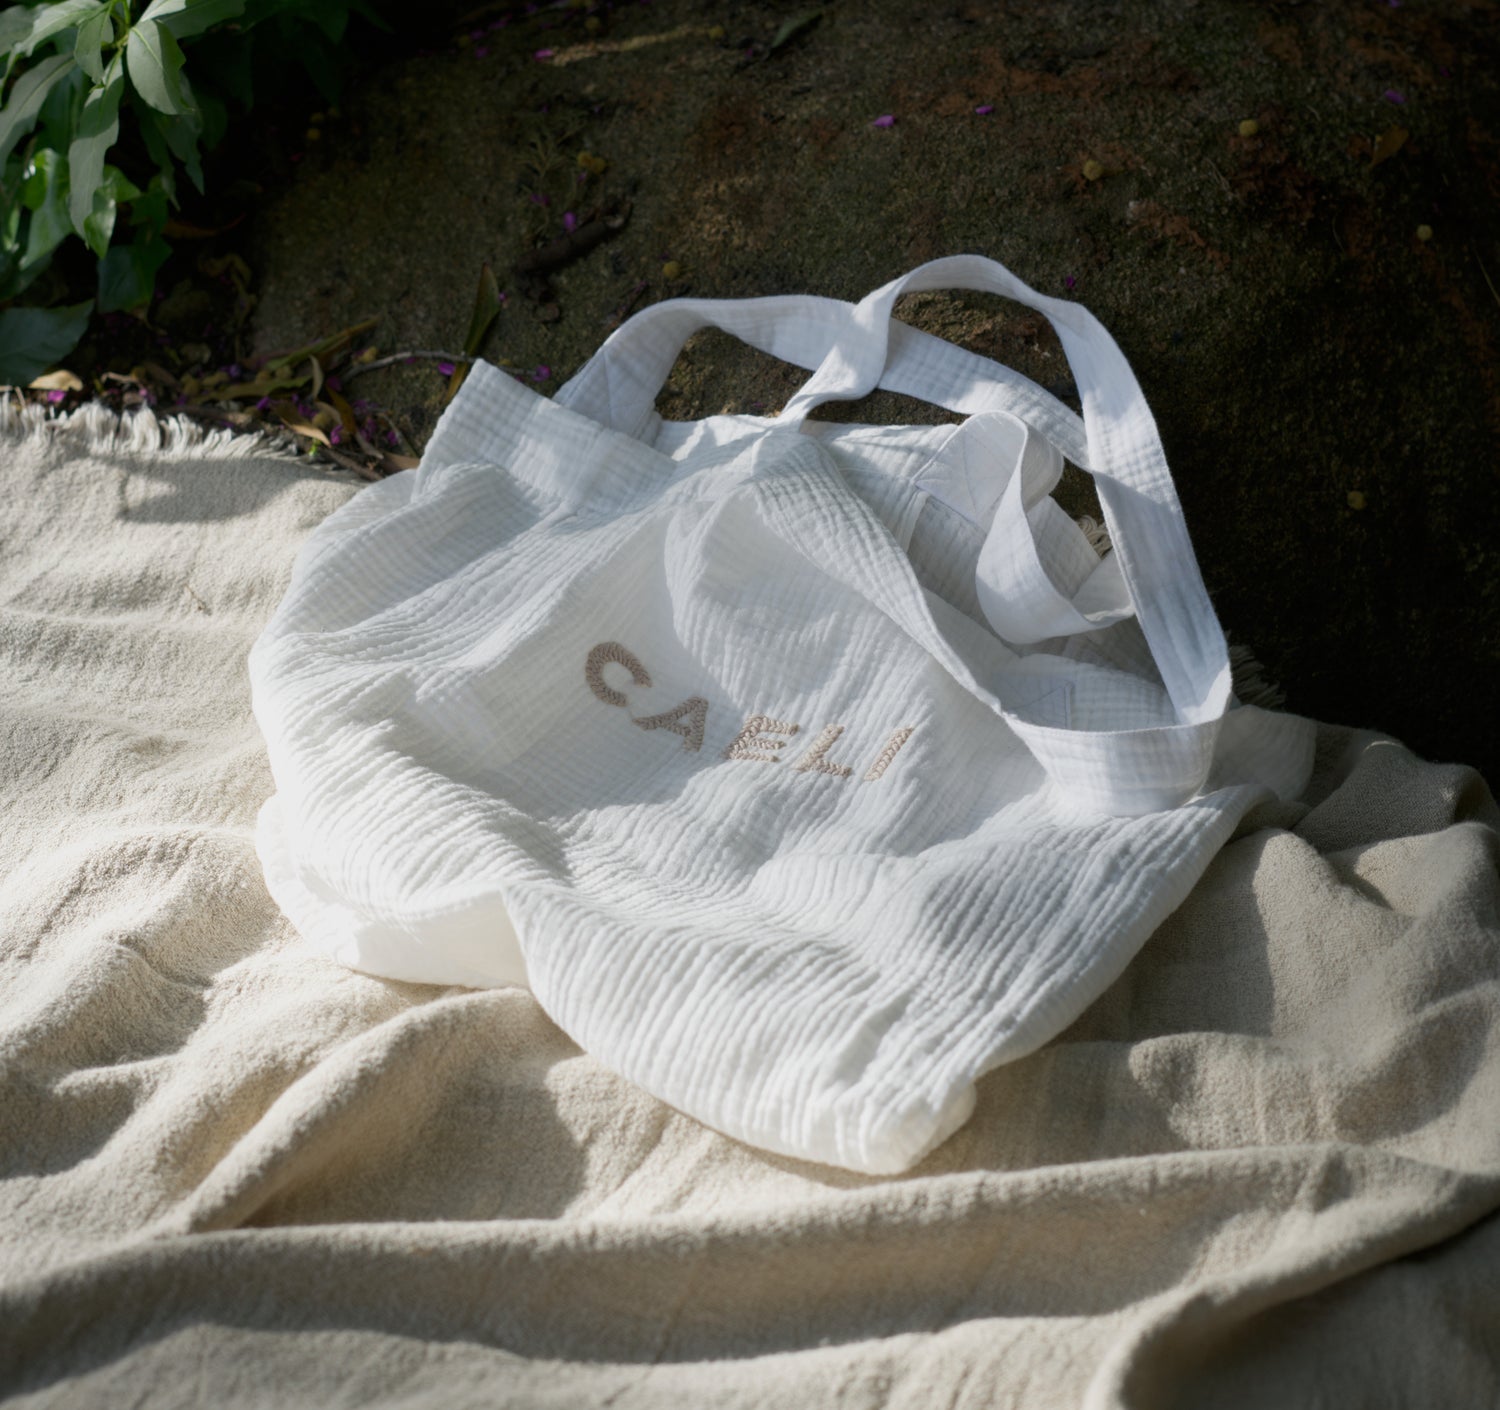 white tote bag with caeli logo